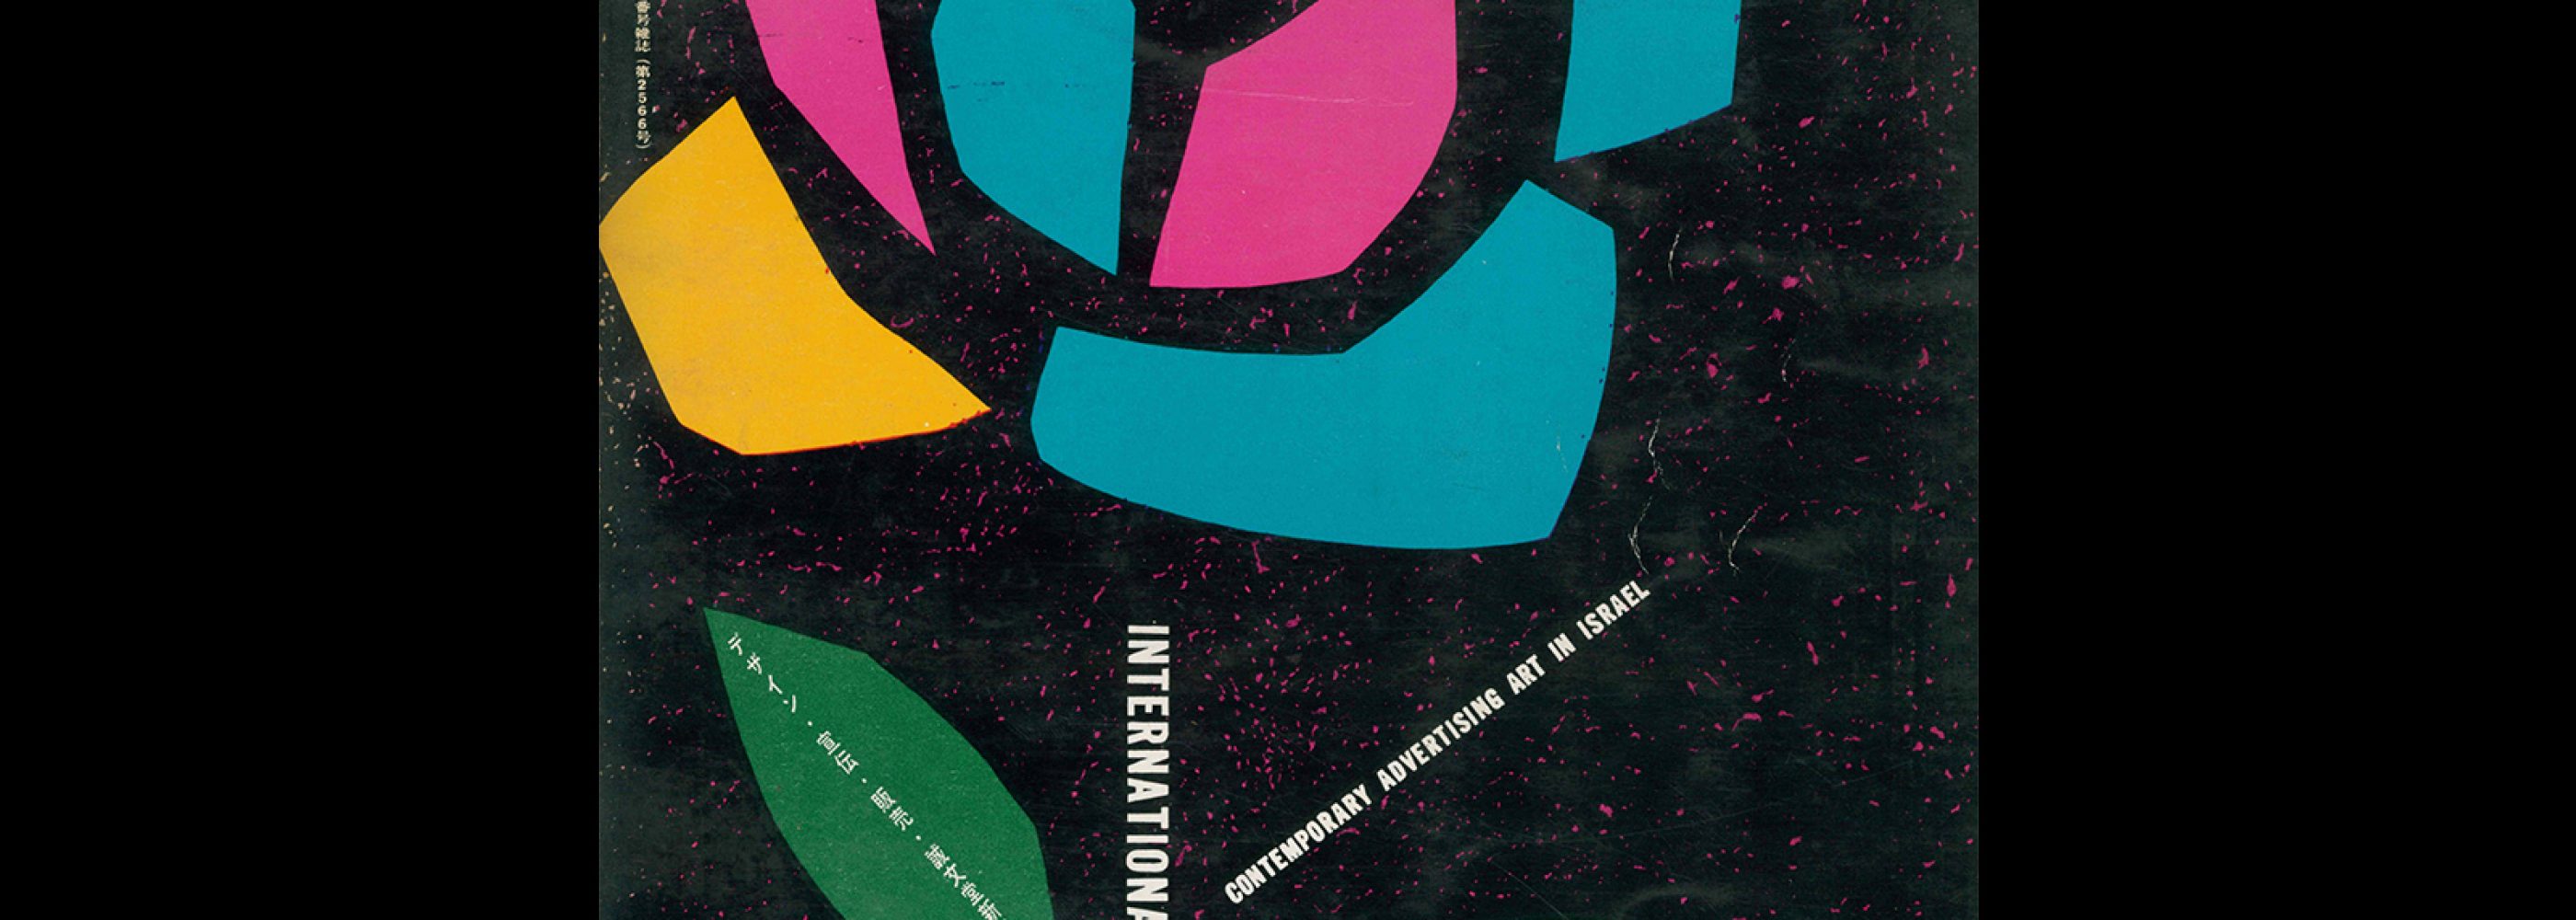 Idea 39, 1960-2. Cover design by Zvi Narkiss